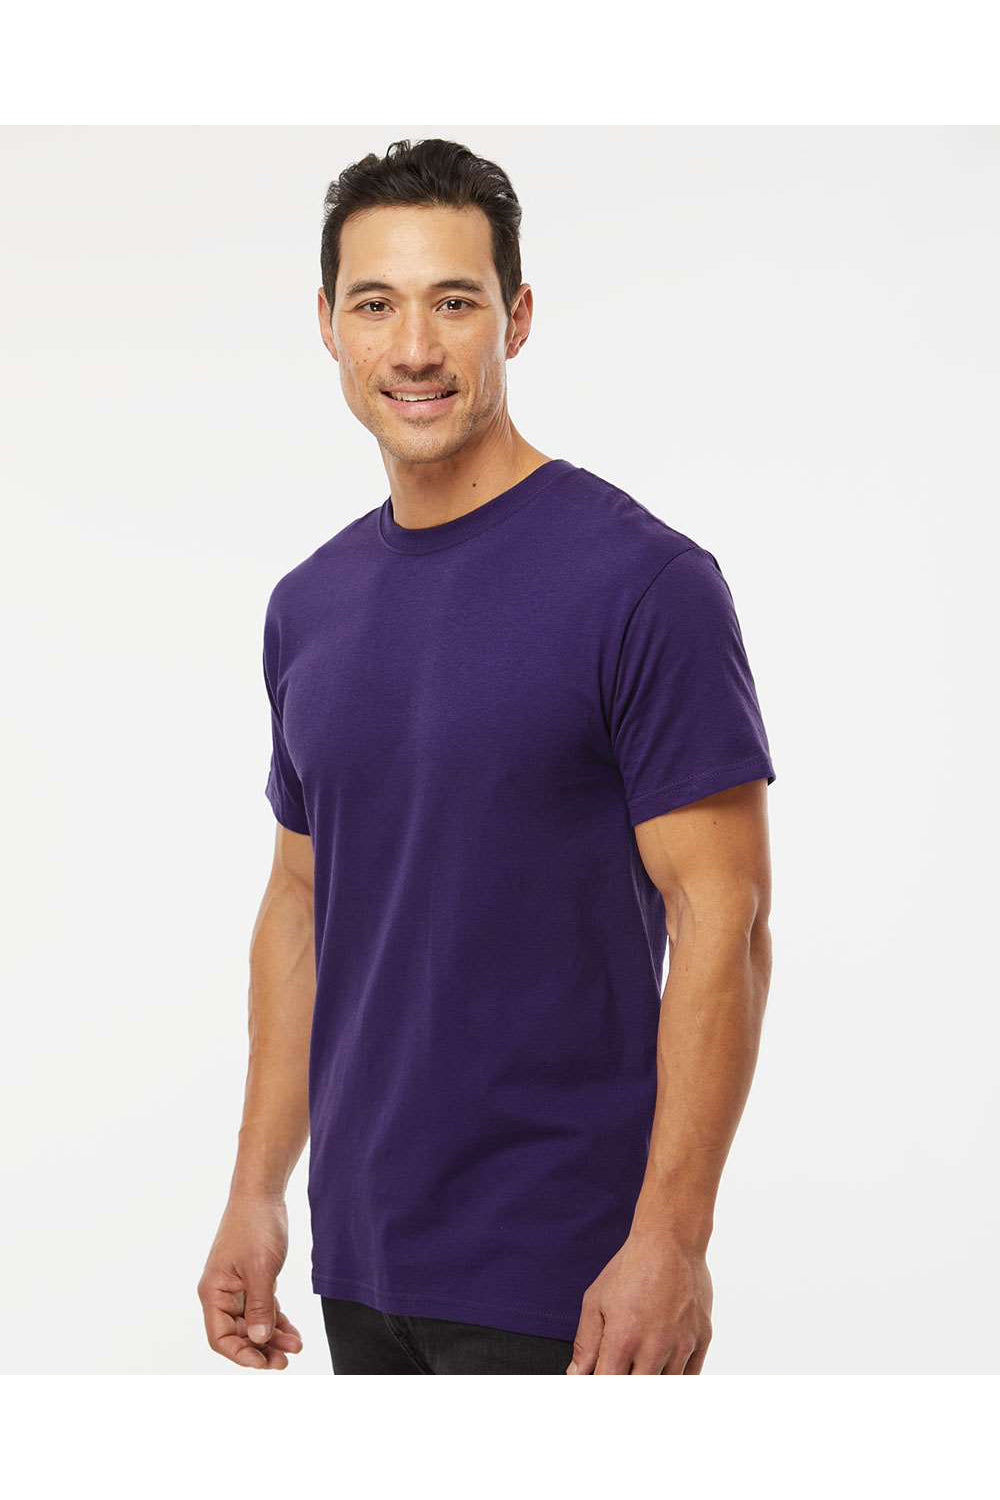 M&O 4800 Mens Gold Soft Touch Short Sleeve Crewneck T-Shirt Purple Model Side